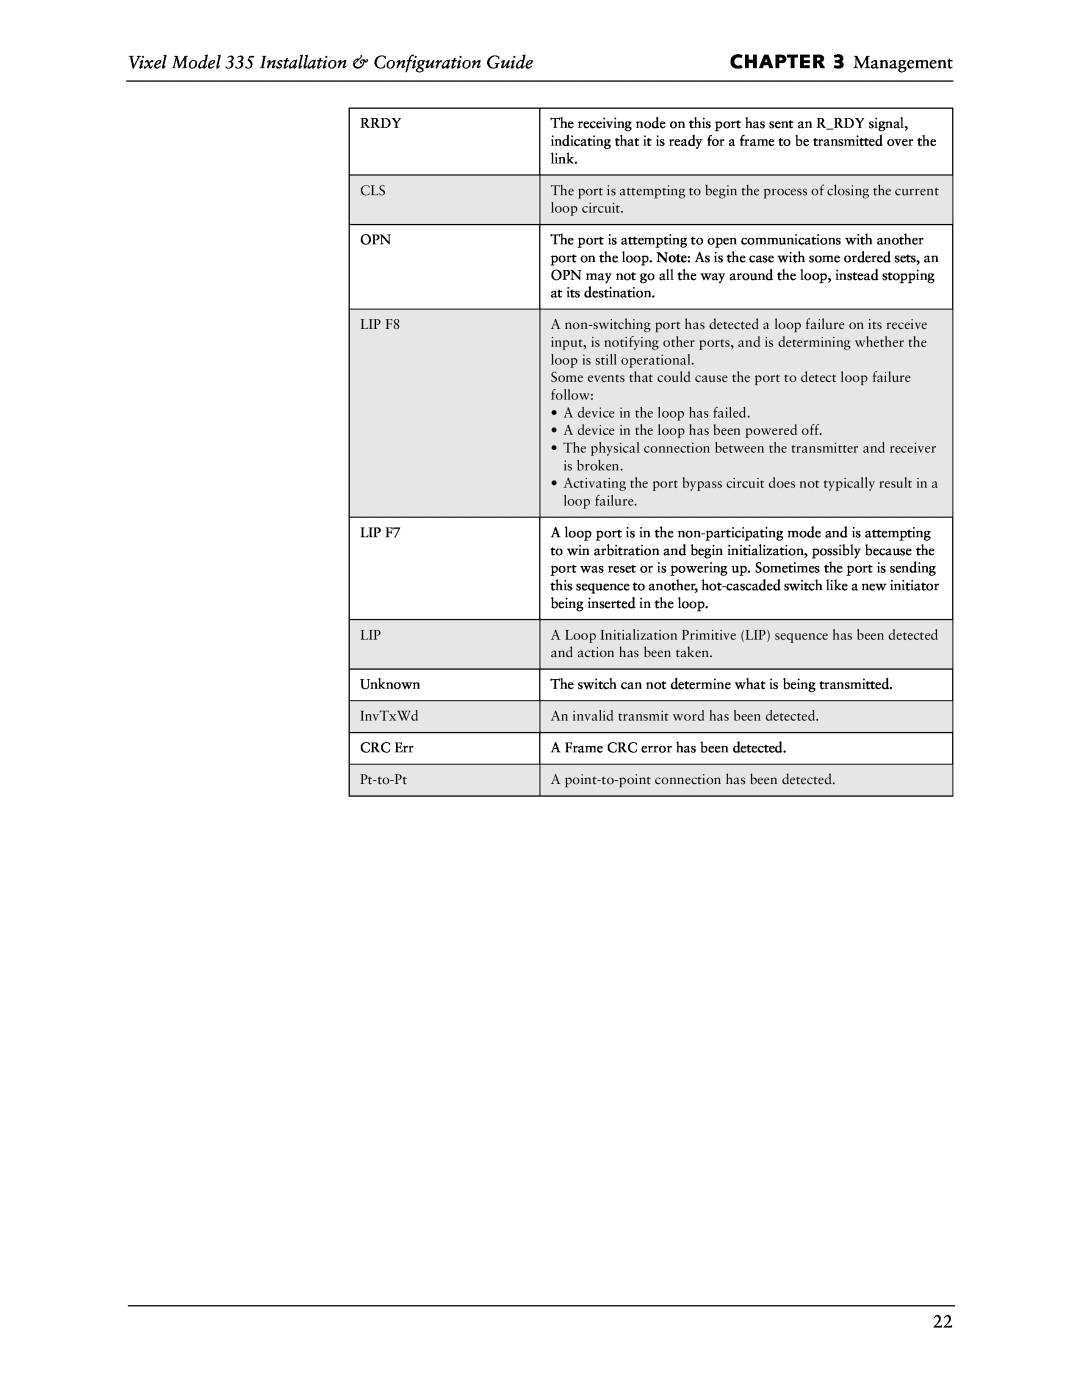 Vixel manual Management, Vixel Model 335 Installation & Configuration Guide, Rrdy 